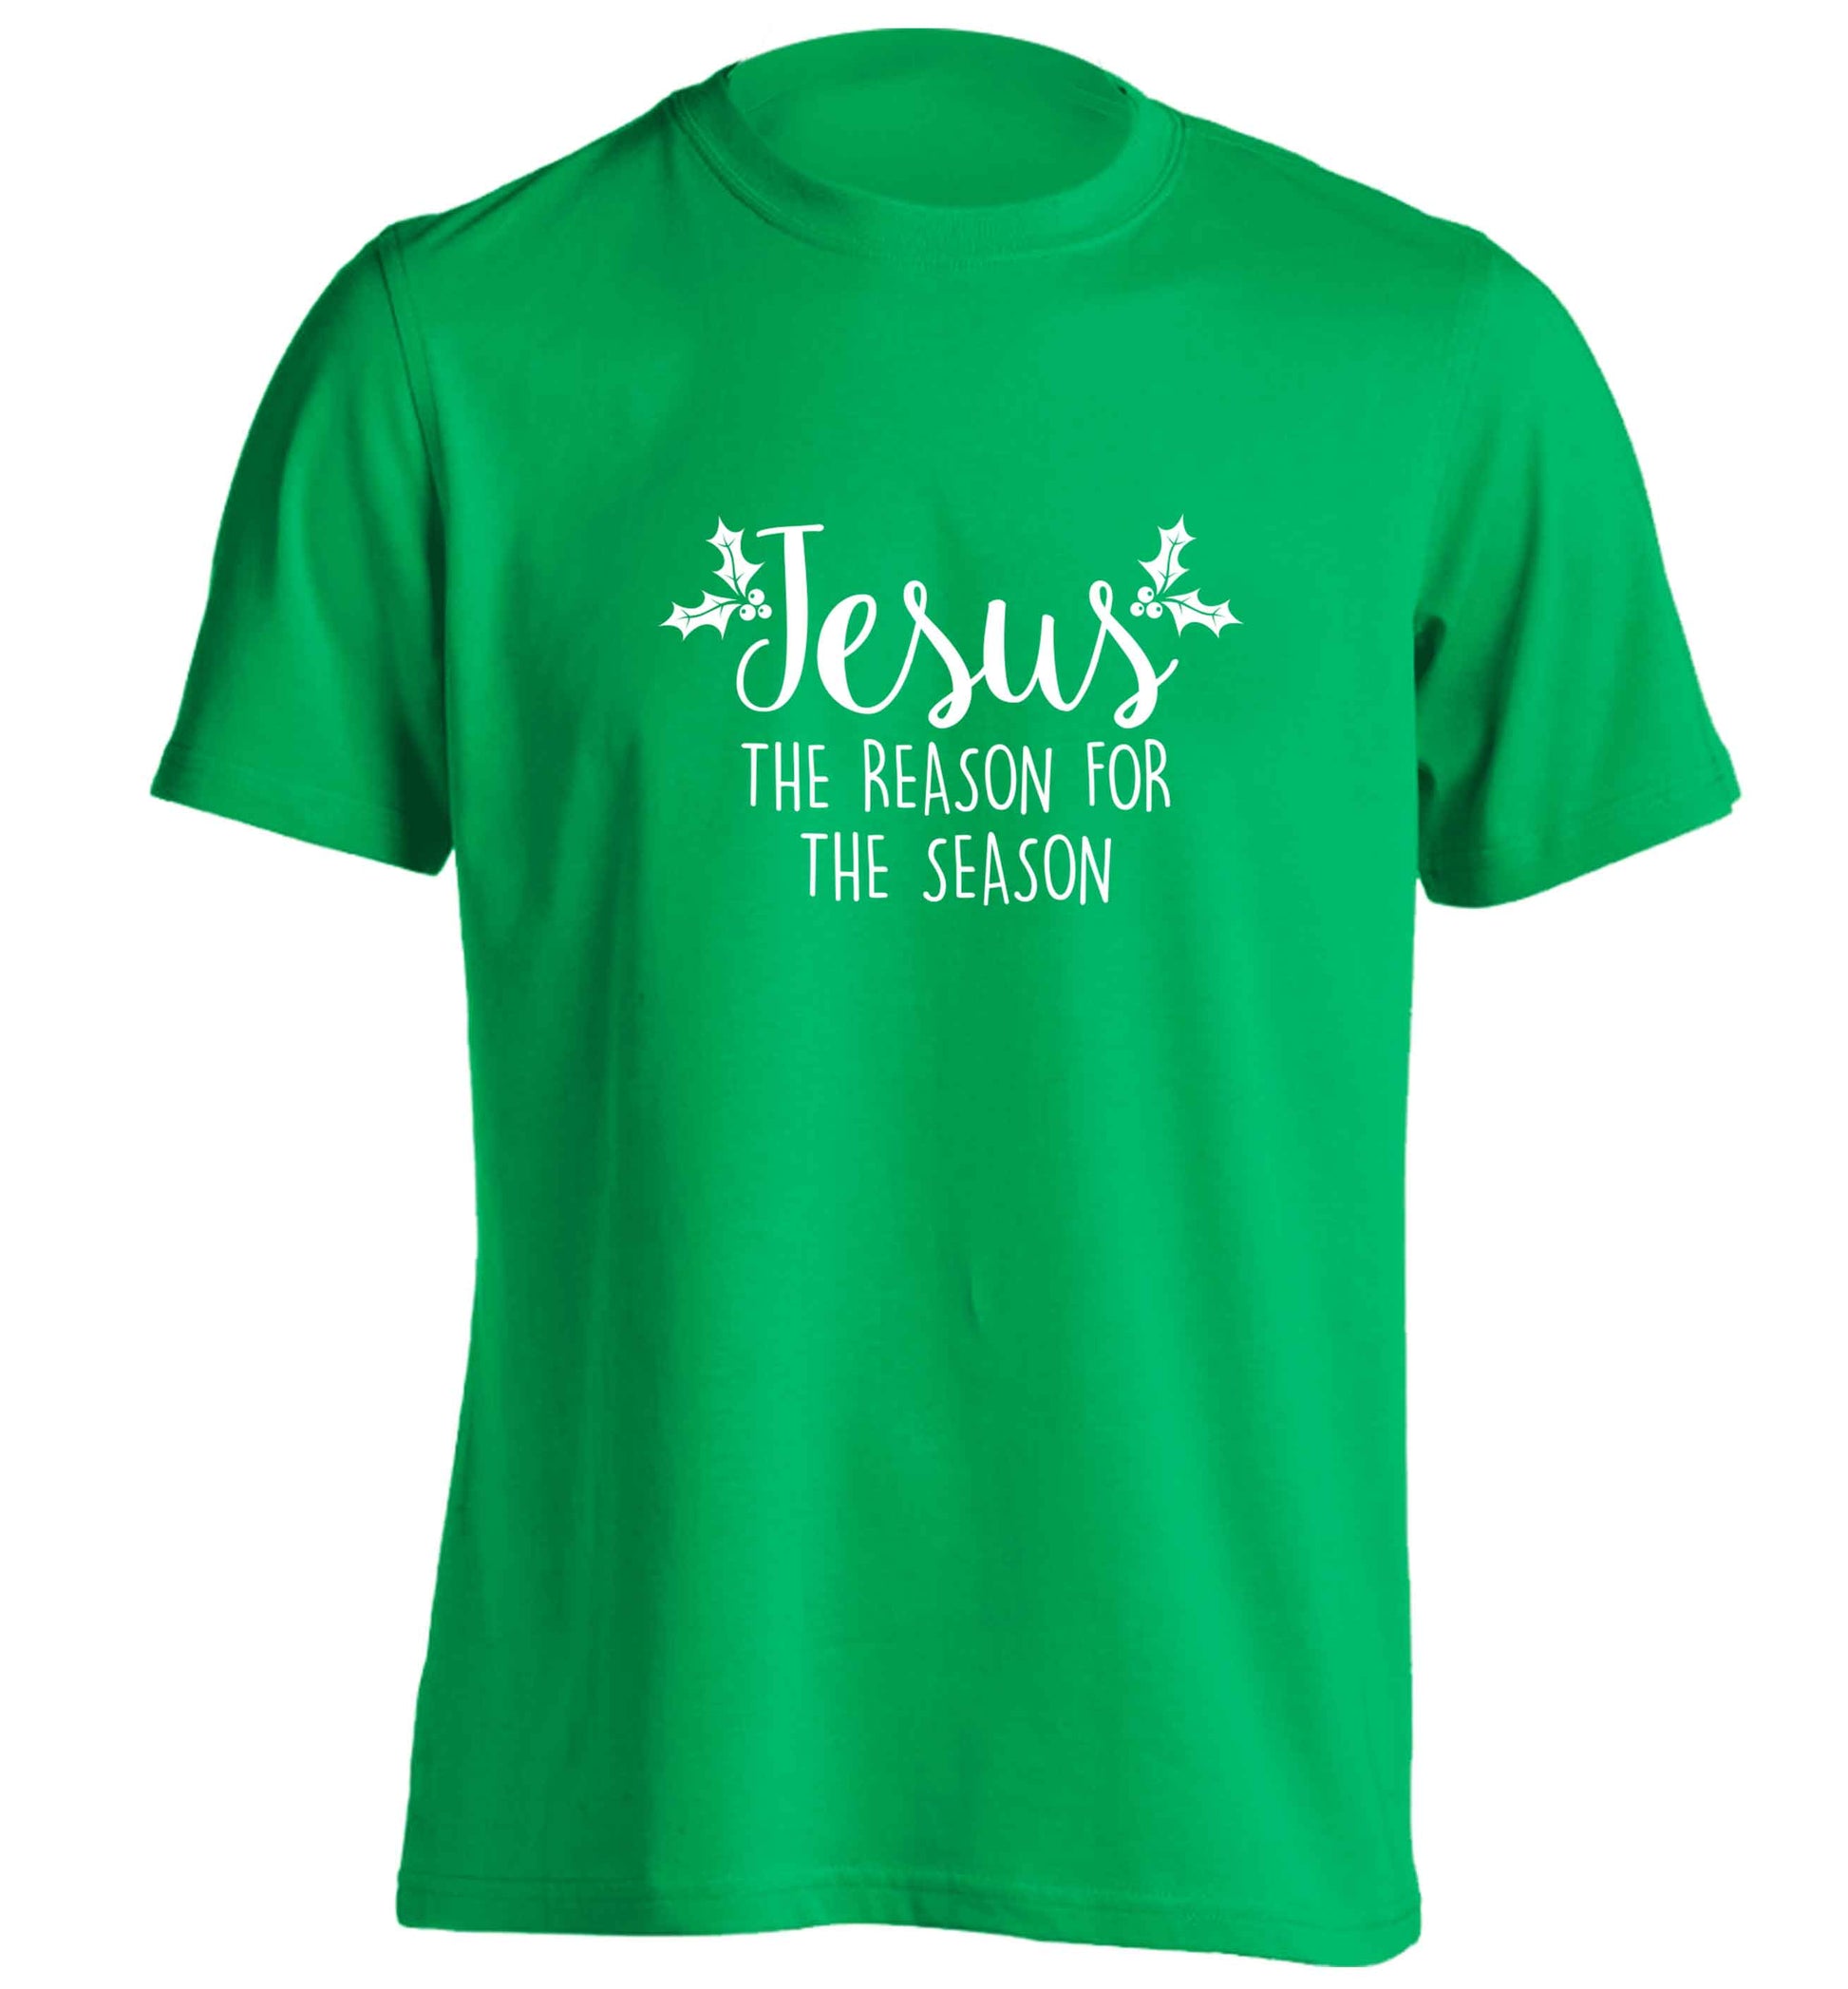 Jesus the reason for the season adults unisex green Tshirt 2XL